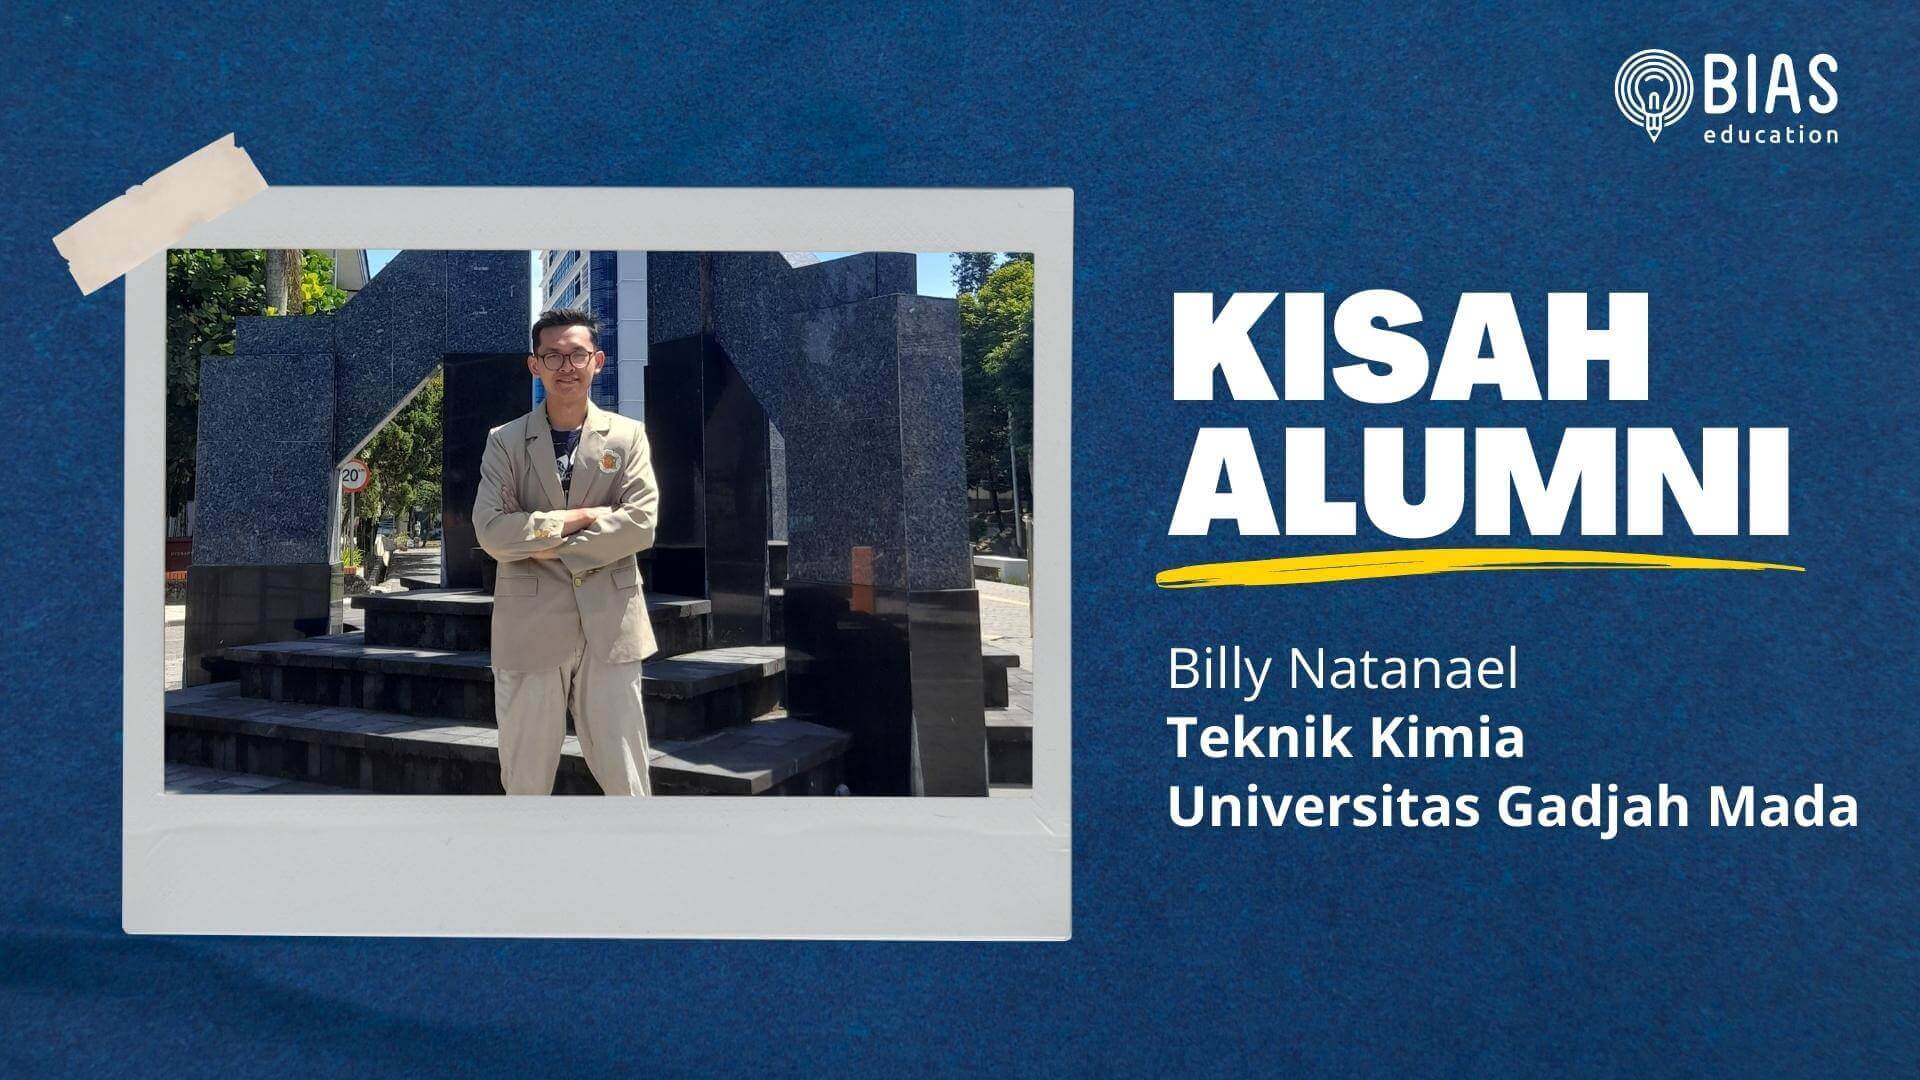 Kisah Alumni Billy Natanael